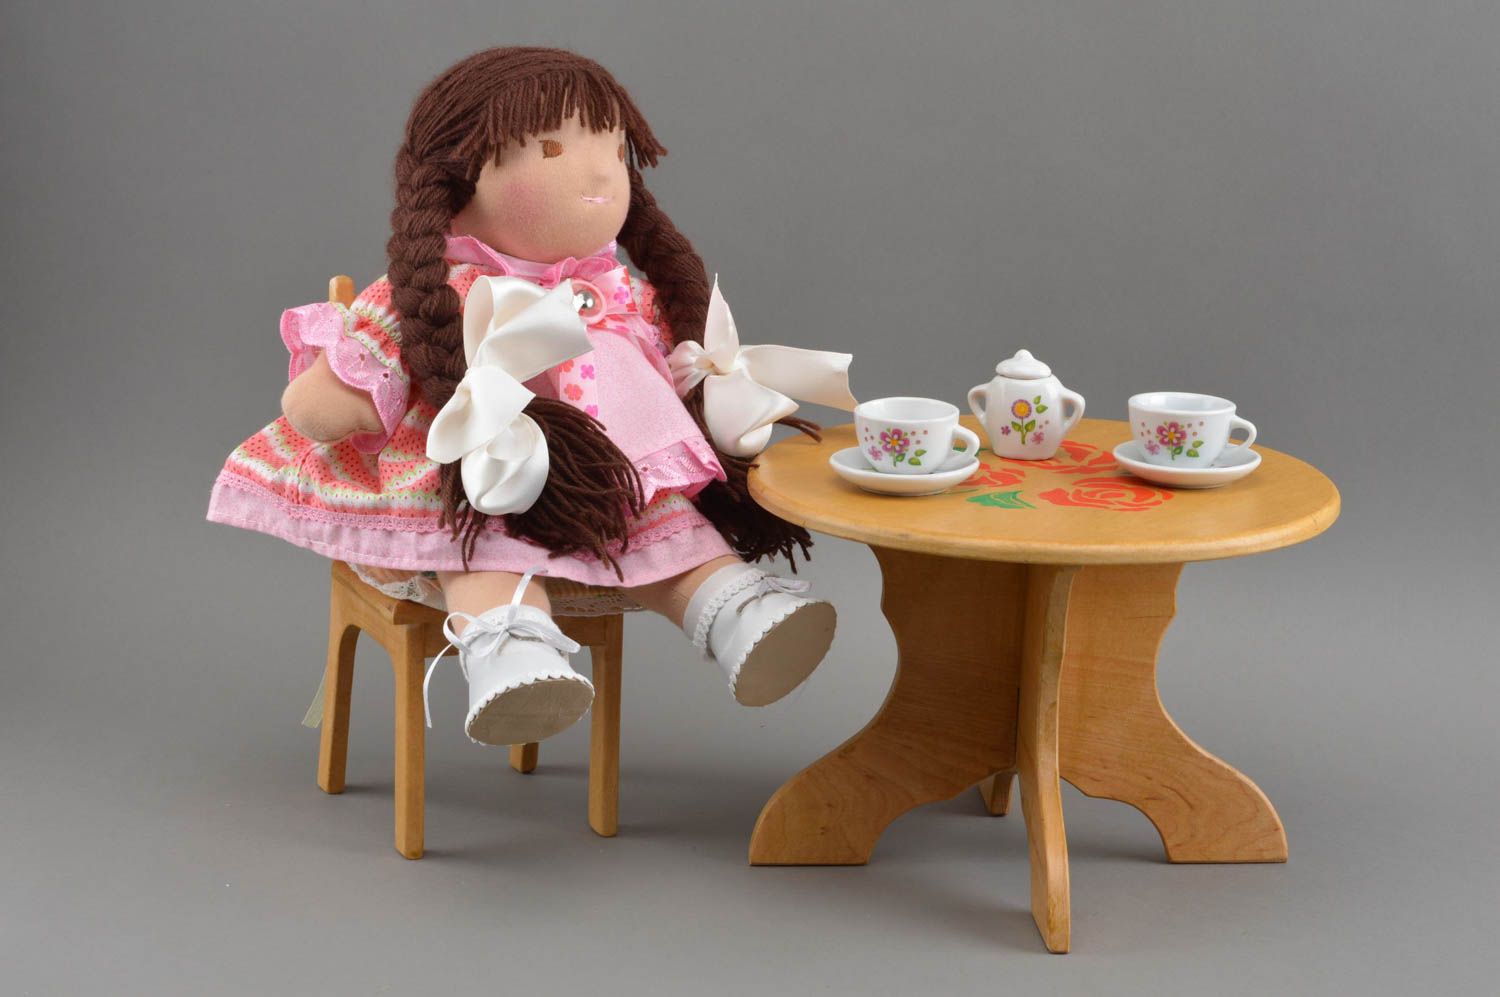 Muñeca artesanal hecha a mano de tela regalos para niñas decoración de hogar foto 1